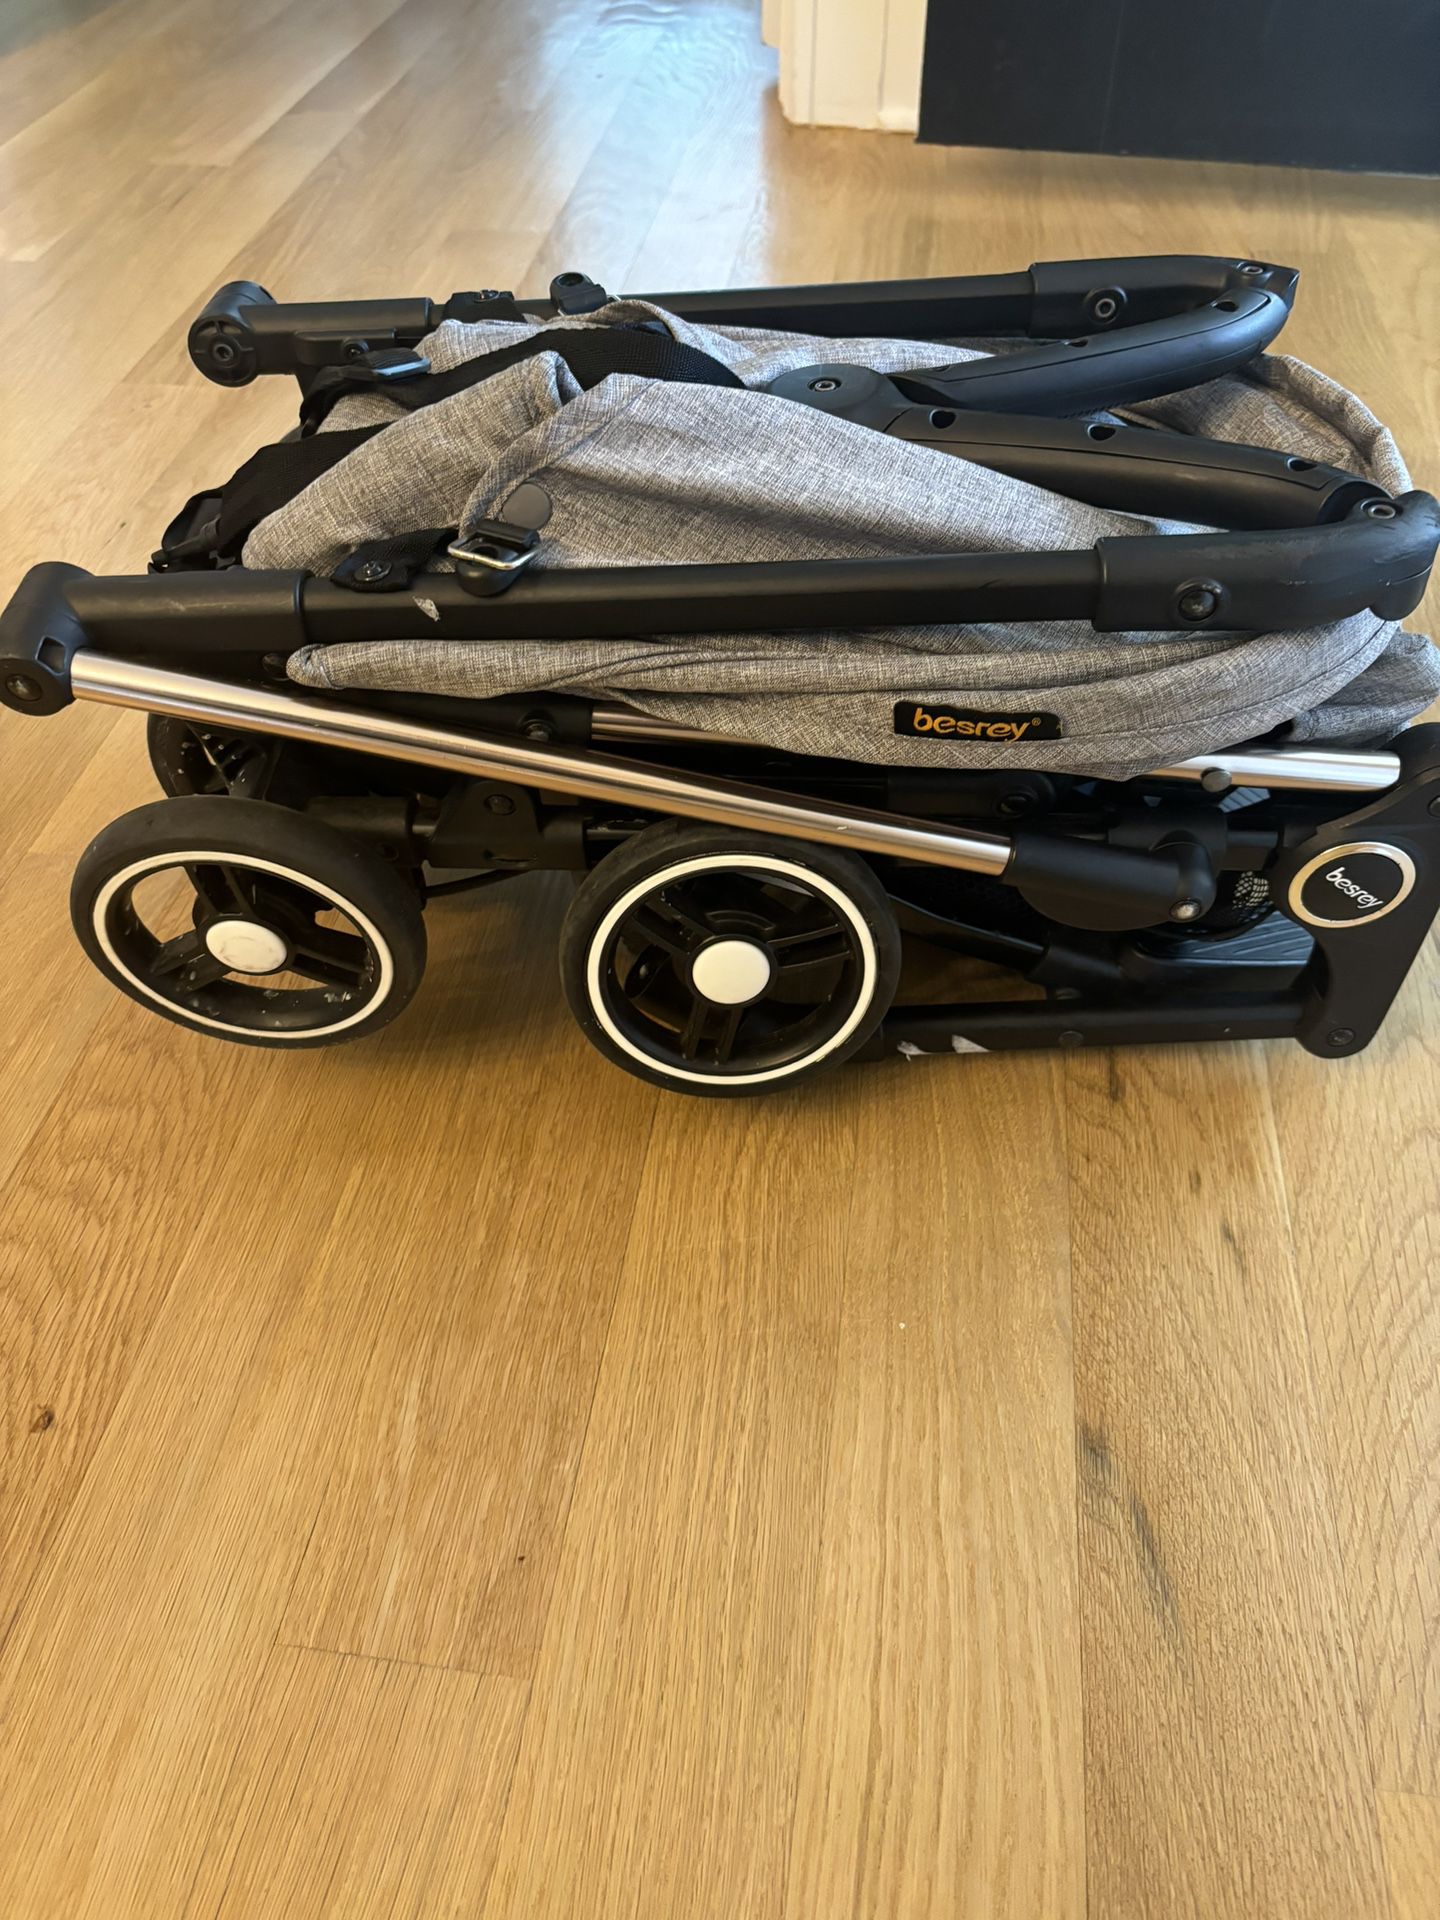 Besrey Travel stroller